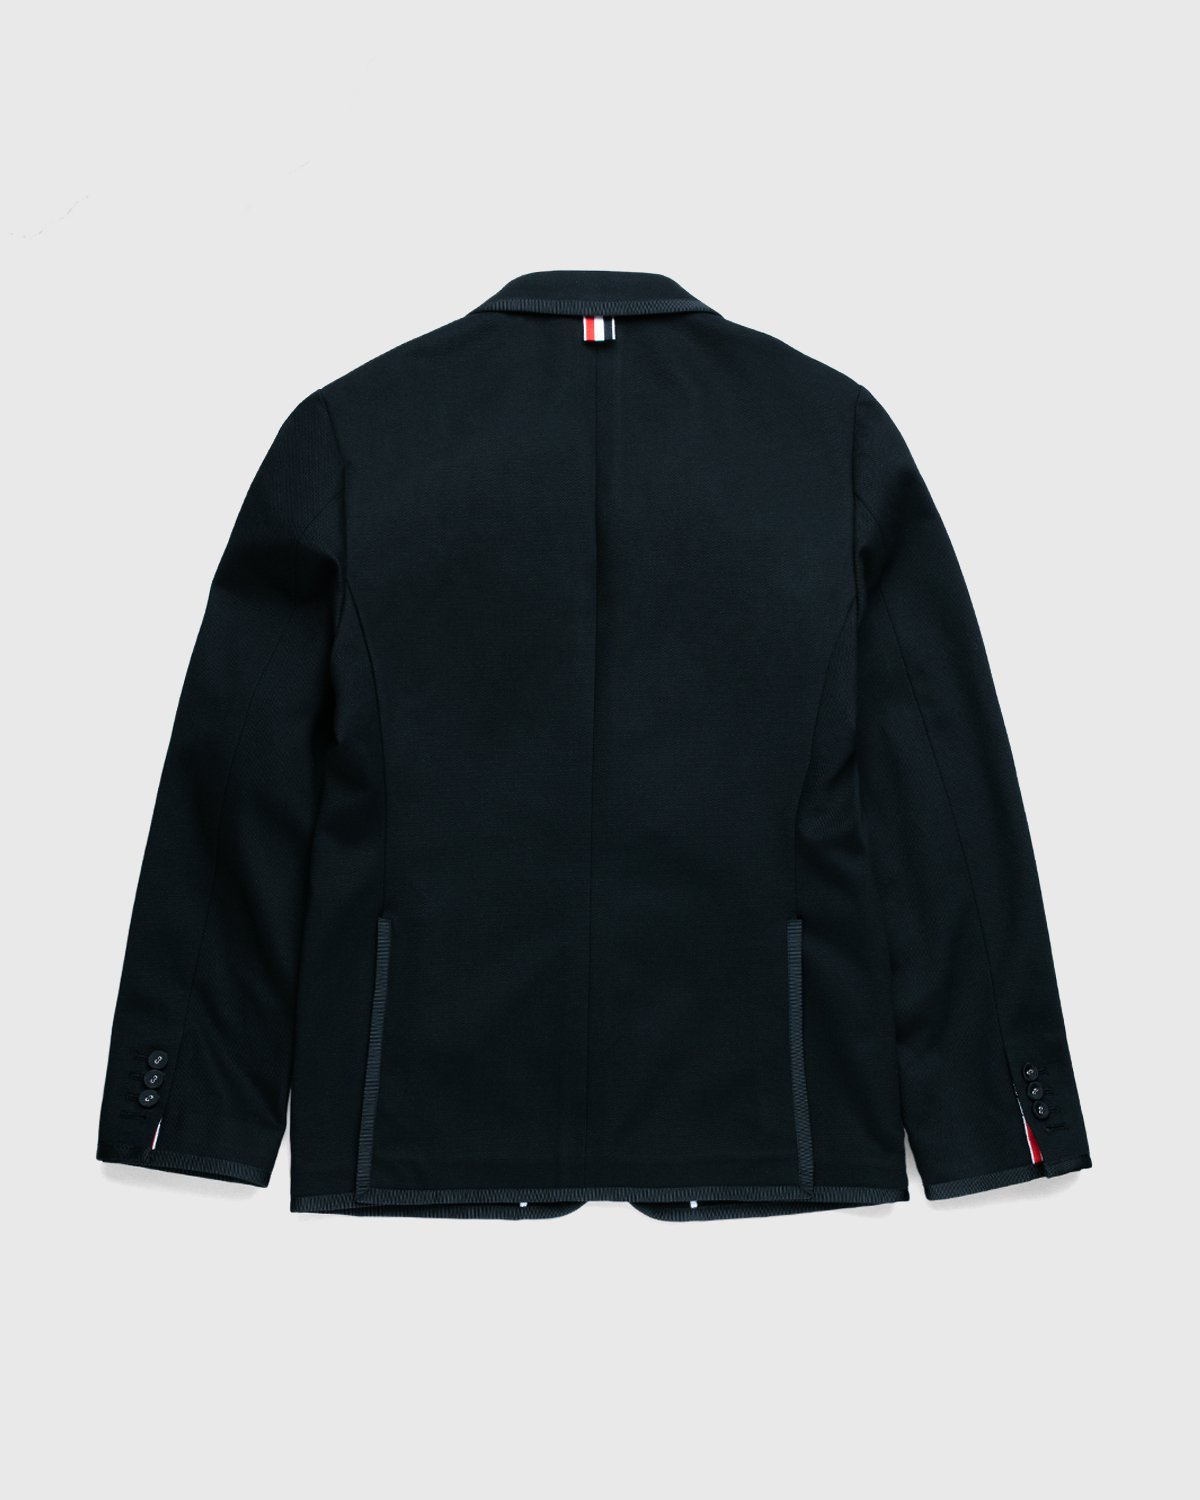 Thom Browne x Highsnobiety - Men Deconstructed Sport Jacket Black - Clothing - Black - Image 2